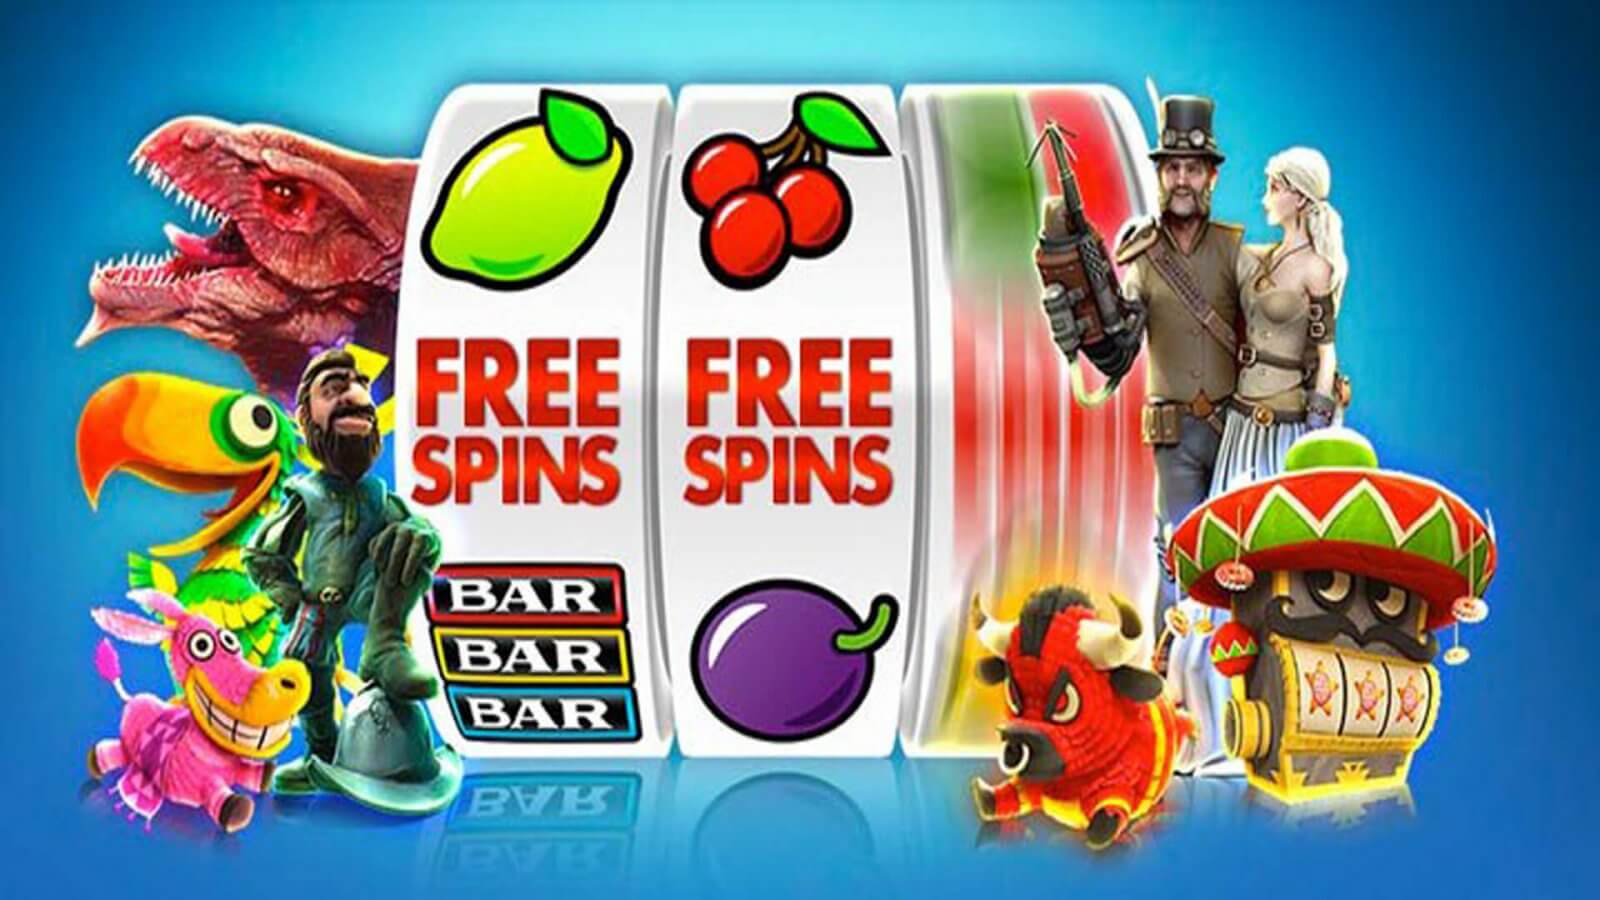  free spins в онлайн казино Украины